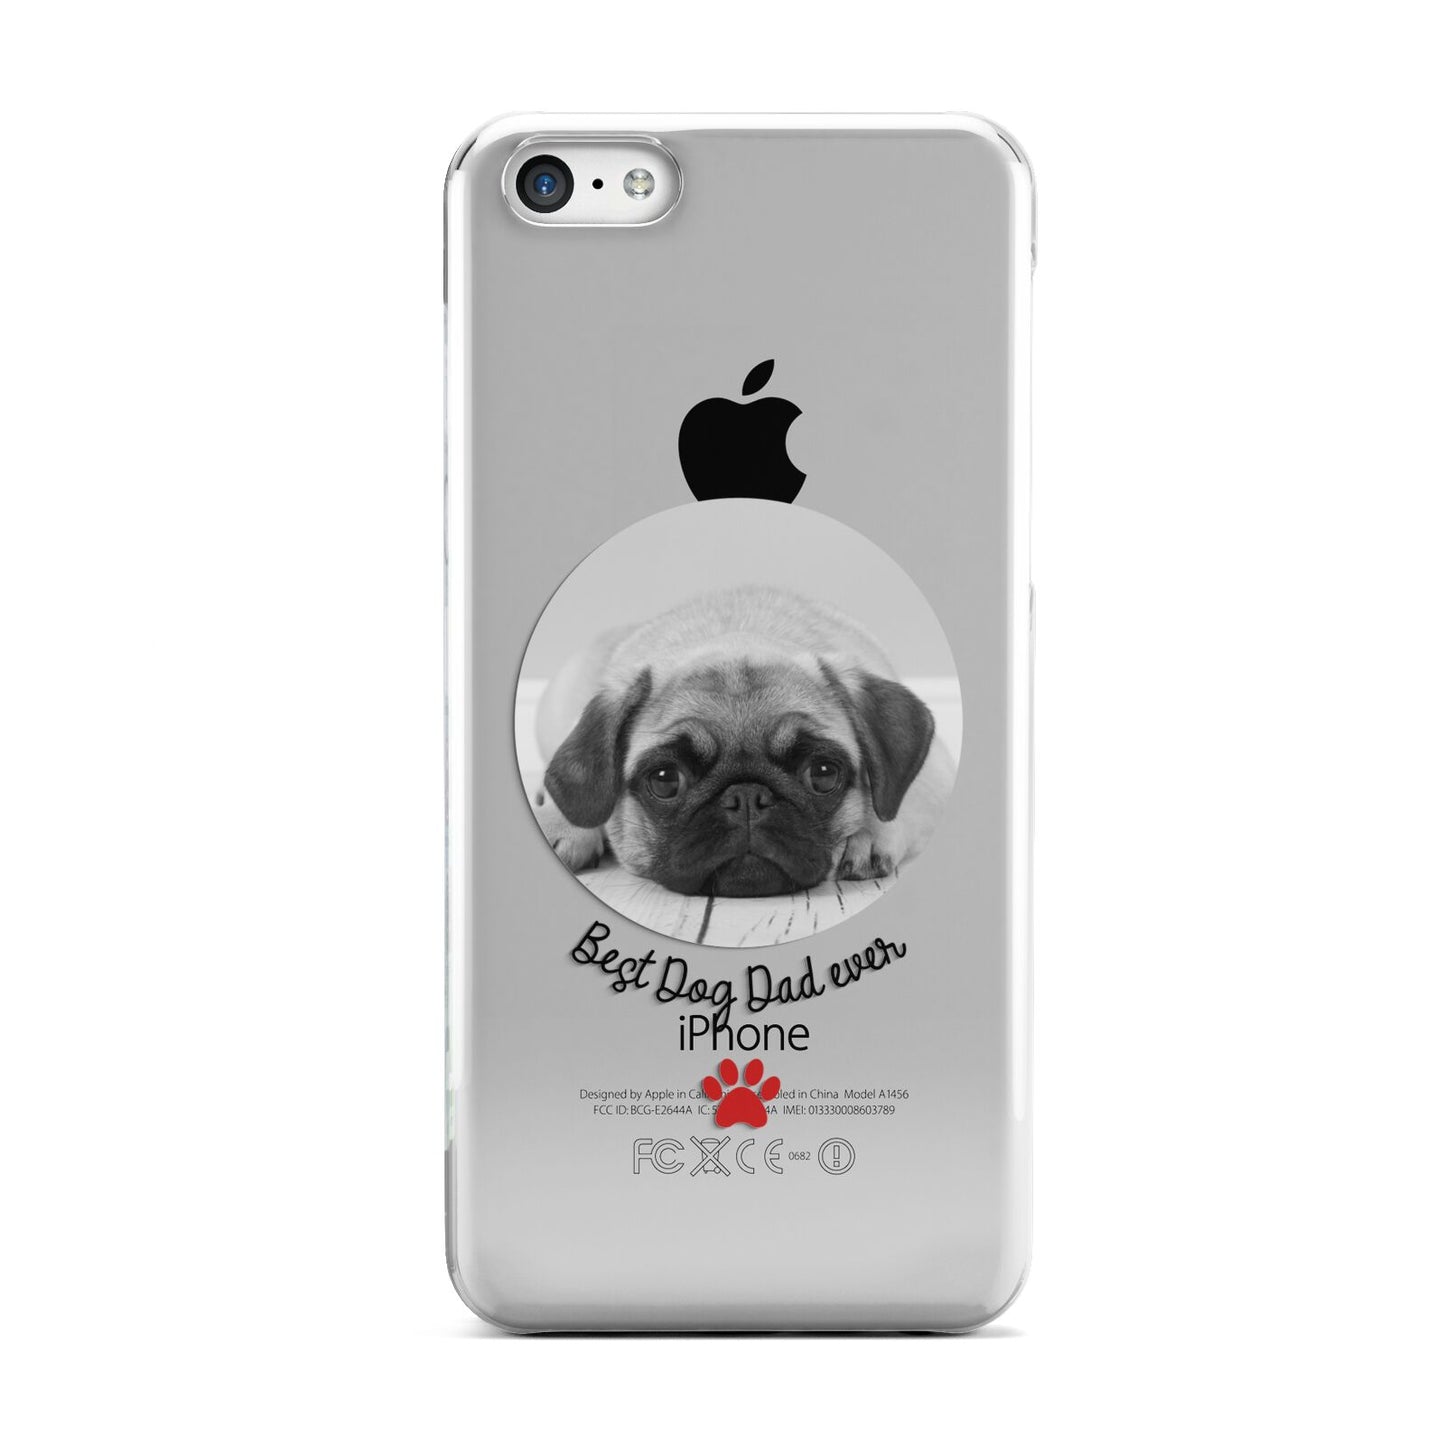 Best Dog Dad Ever Photo Upload Apple iPhone 5c Case